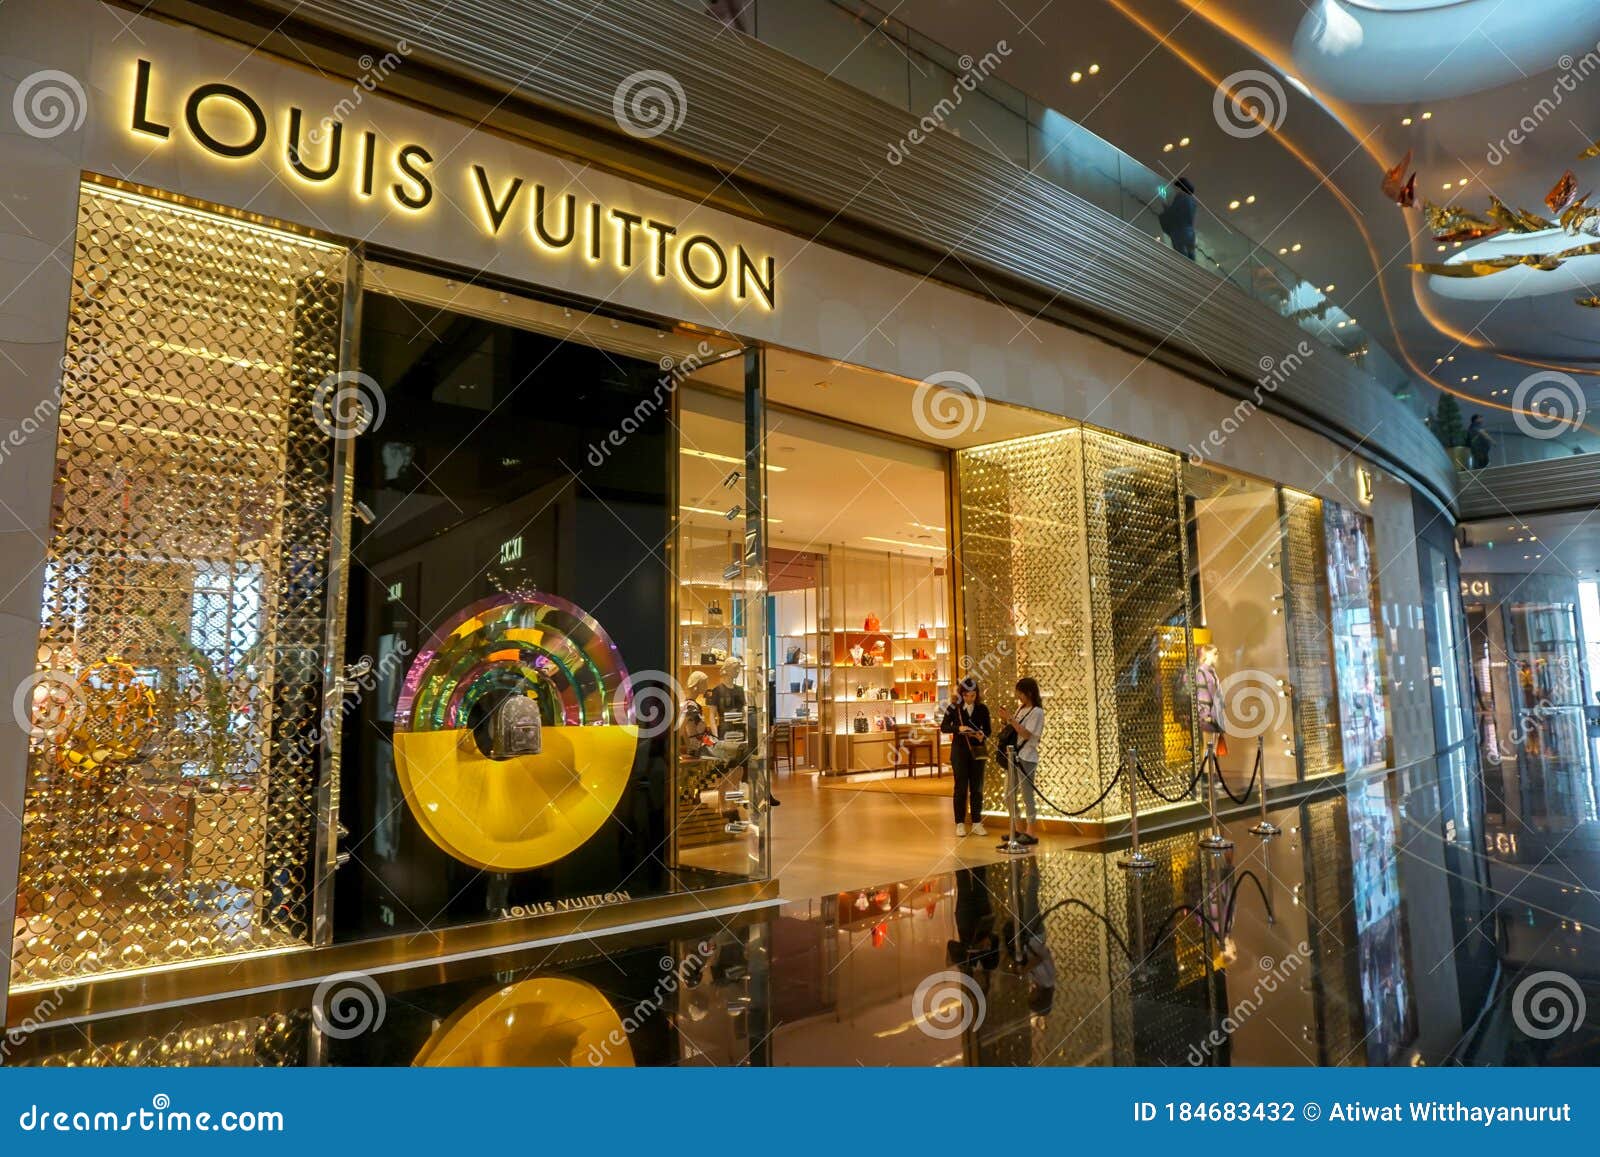 Louis Vuitton Bangkok Iconsiam store, Thailand